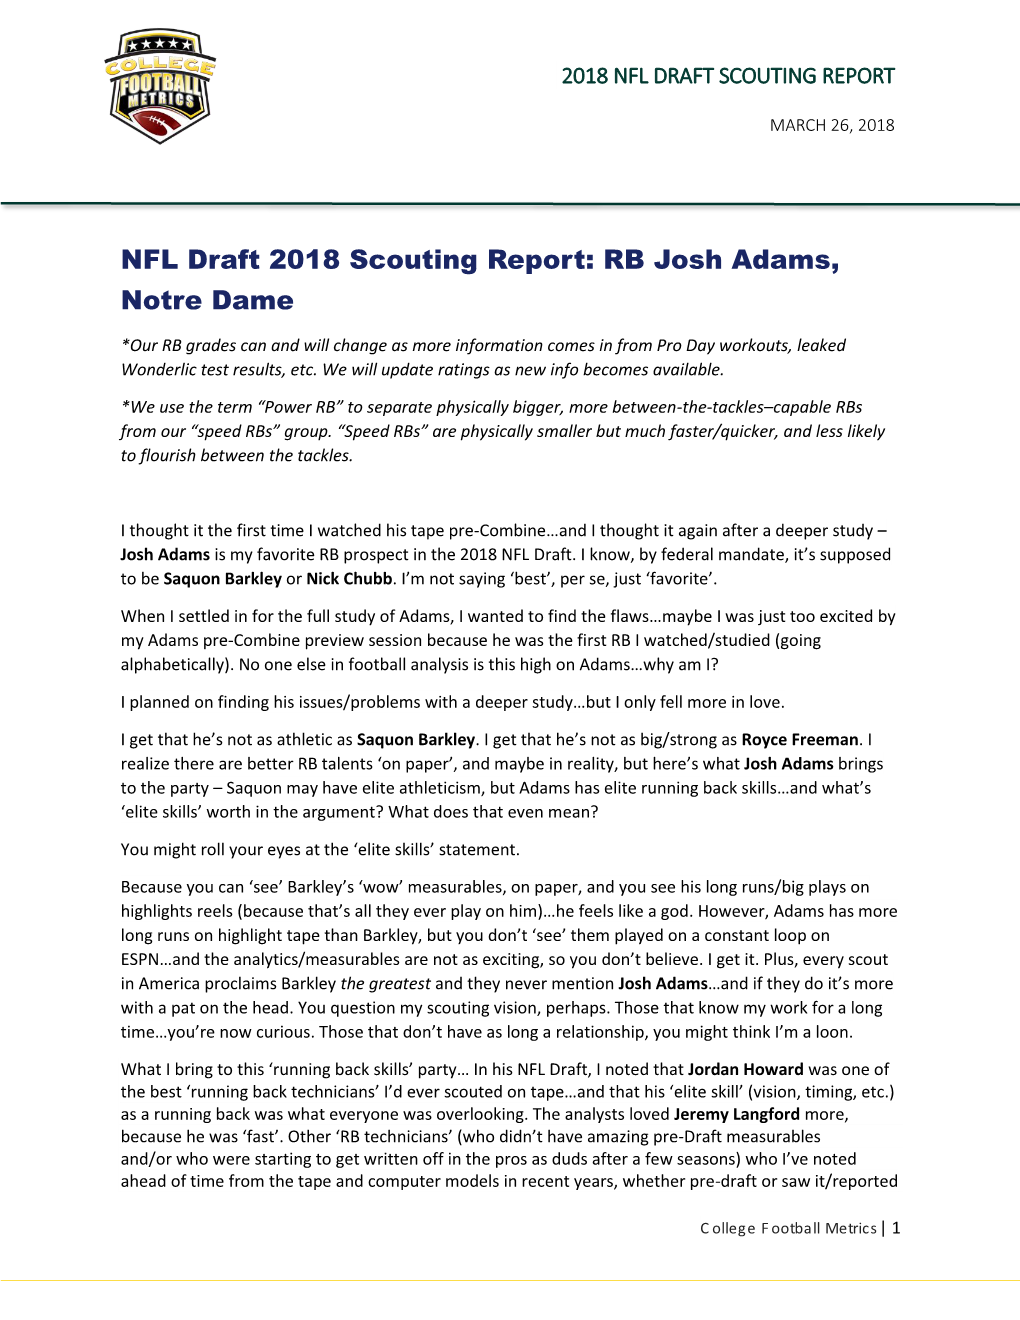 NFL Draft 2018 Scouting Report: RB Josh Adams, Notre Dame